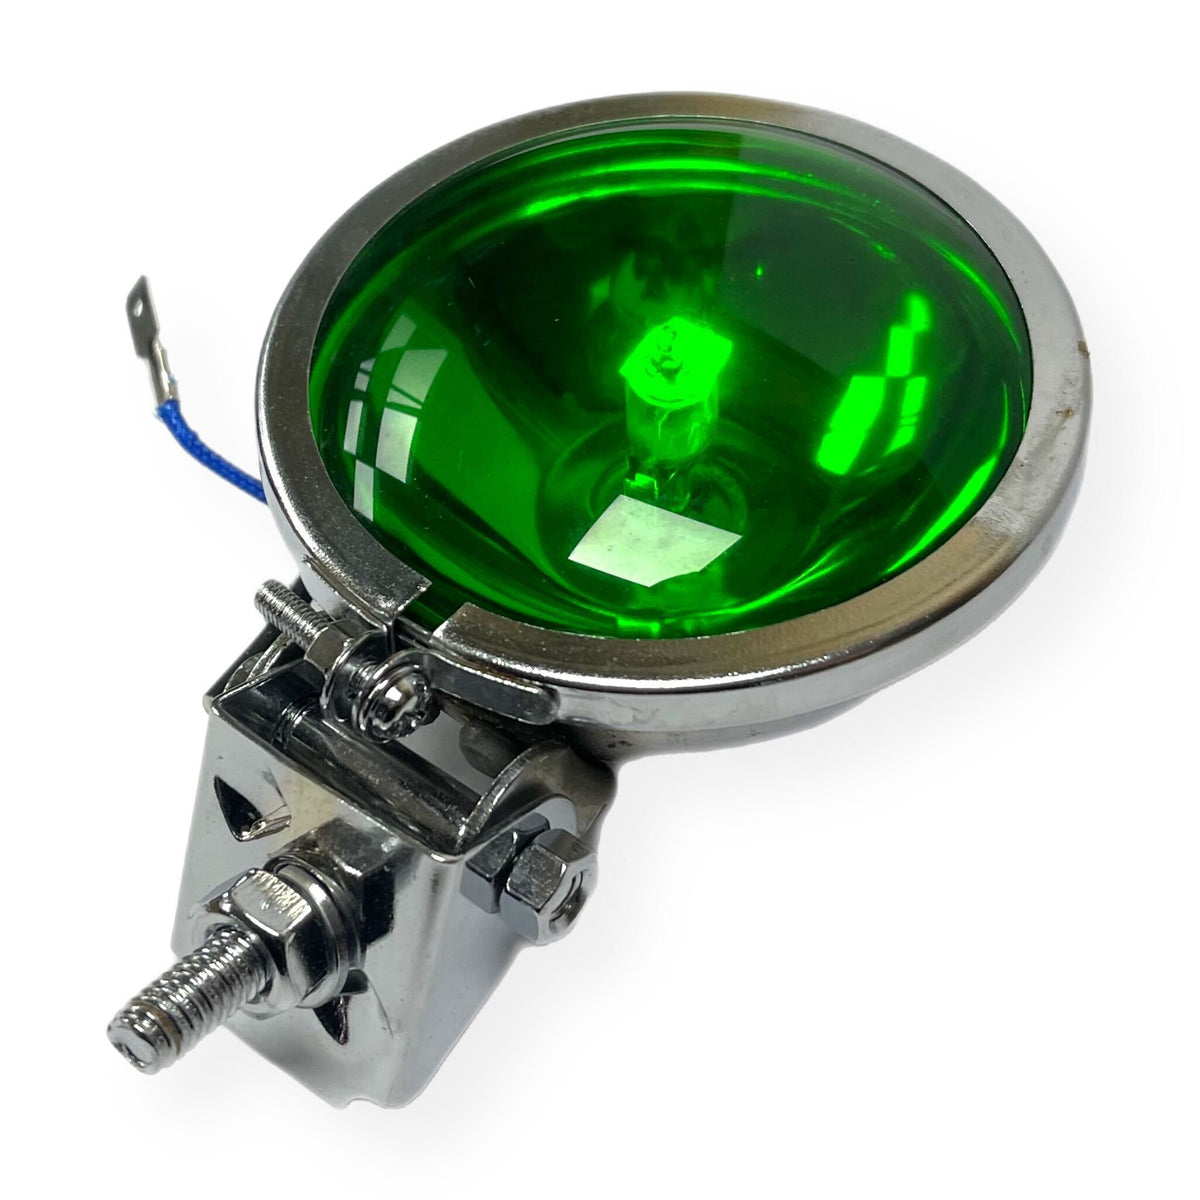 Vespa Lambretta Scooter Lamp Spot Light 9cm Hunter Style Chrome - Green Lens